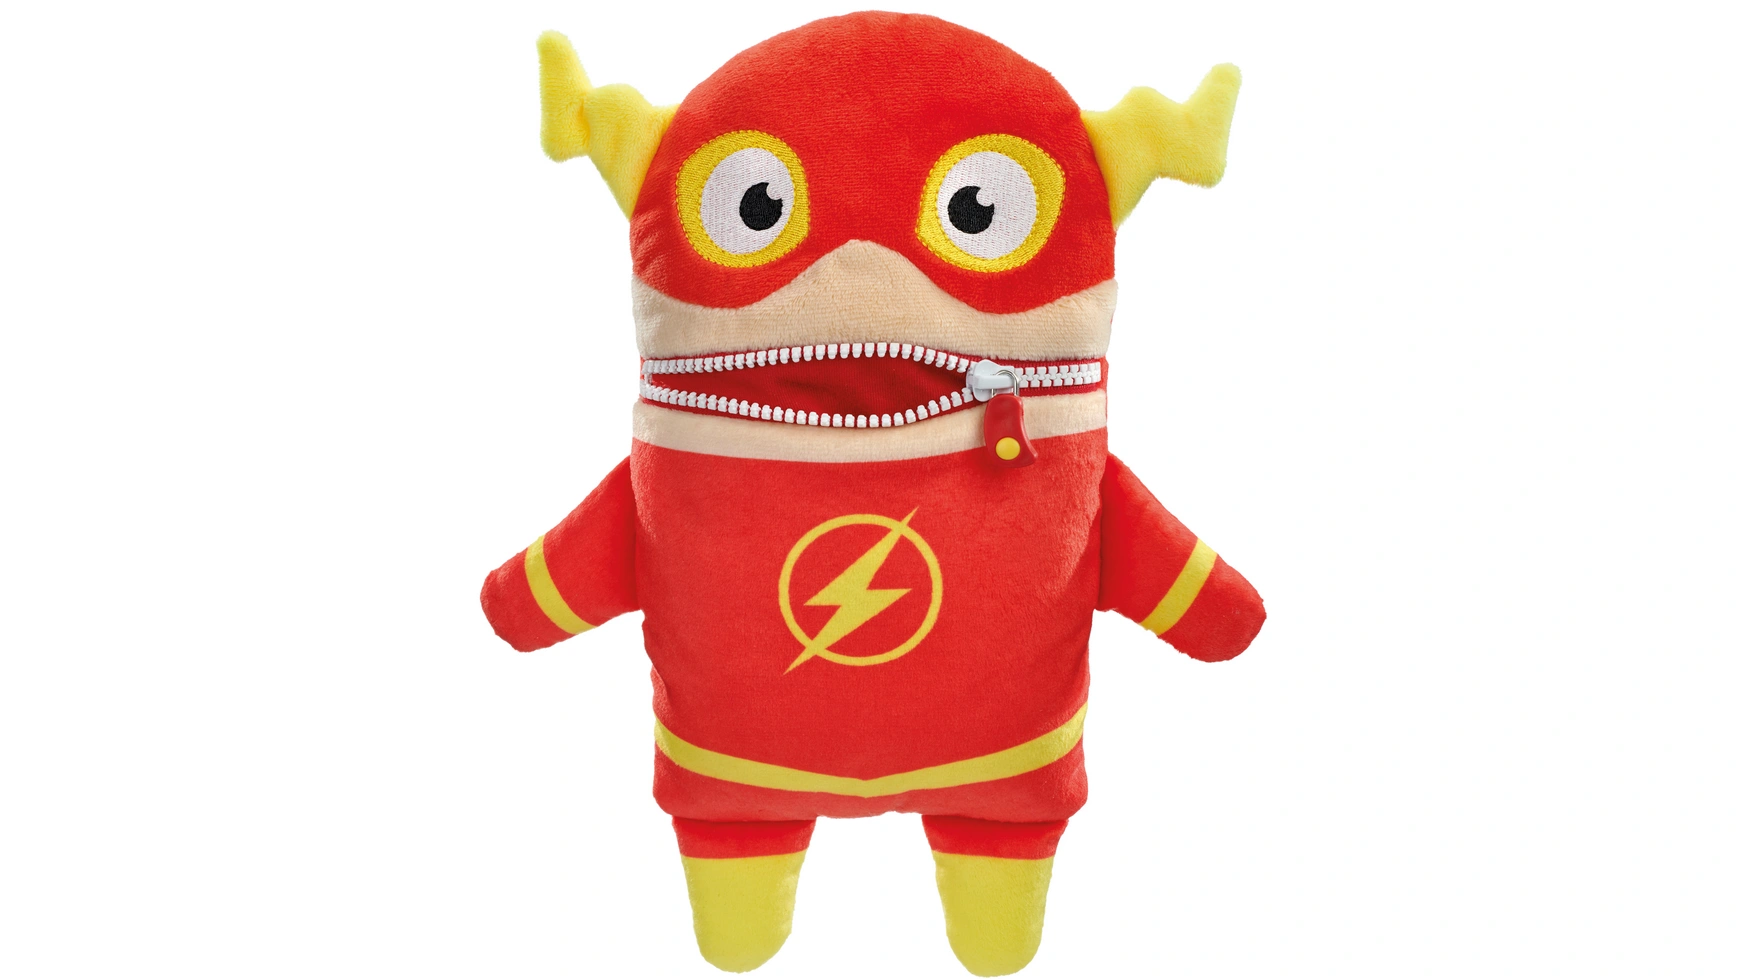 Schmidt Spiele Worry Eater DC Super Hero: Worry Eater, The Flash, 29 см наклейка патч для одежды dc super friends флэш 1